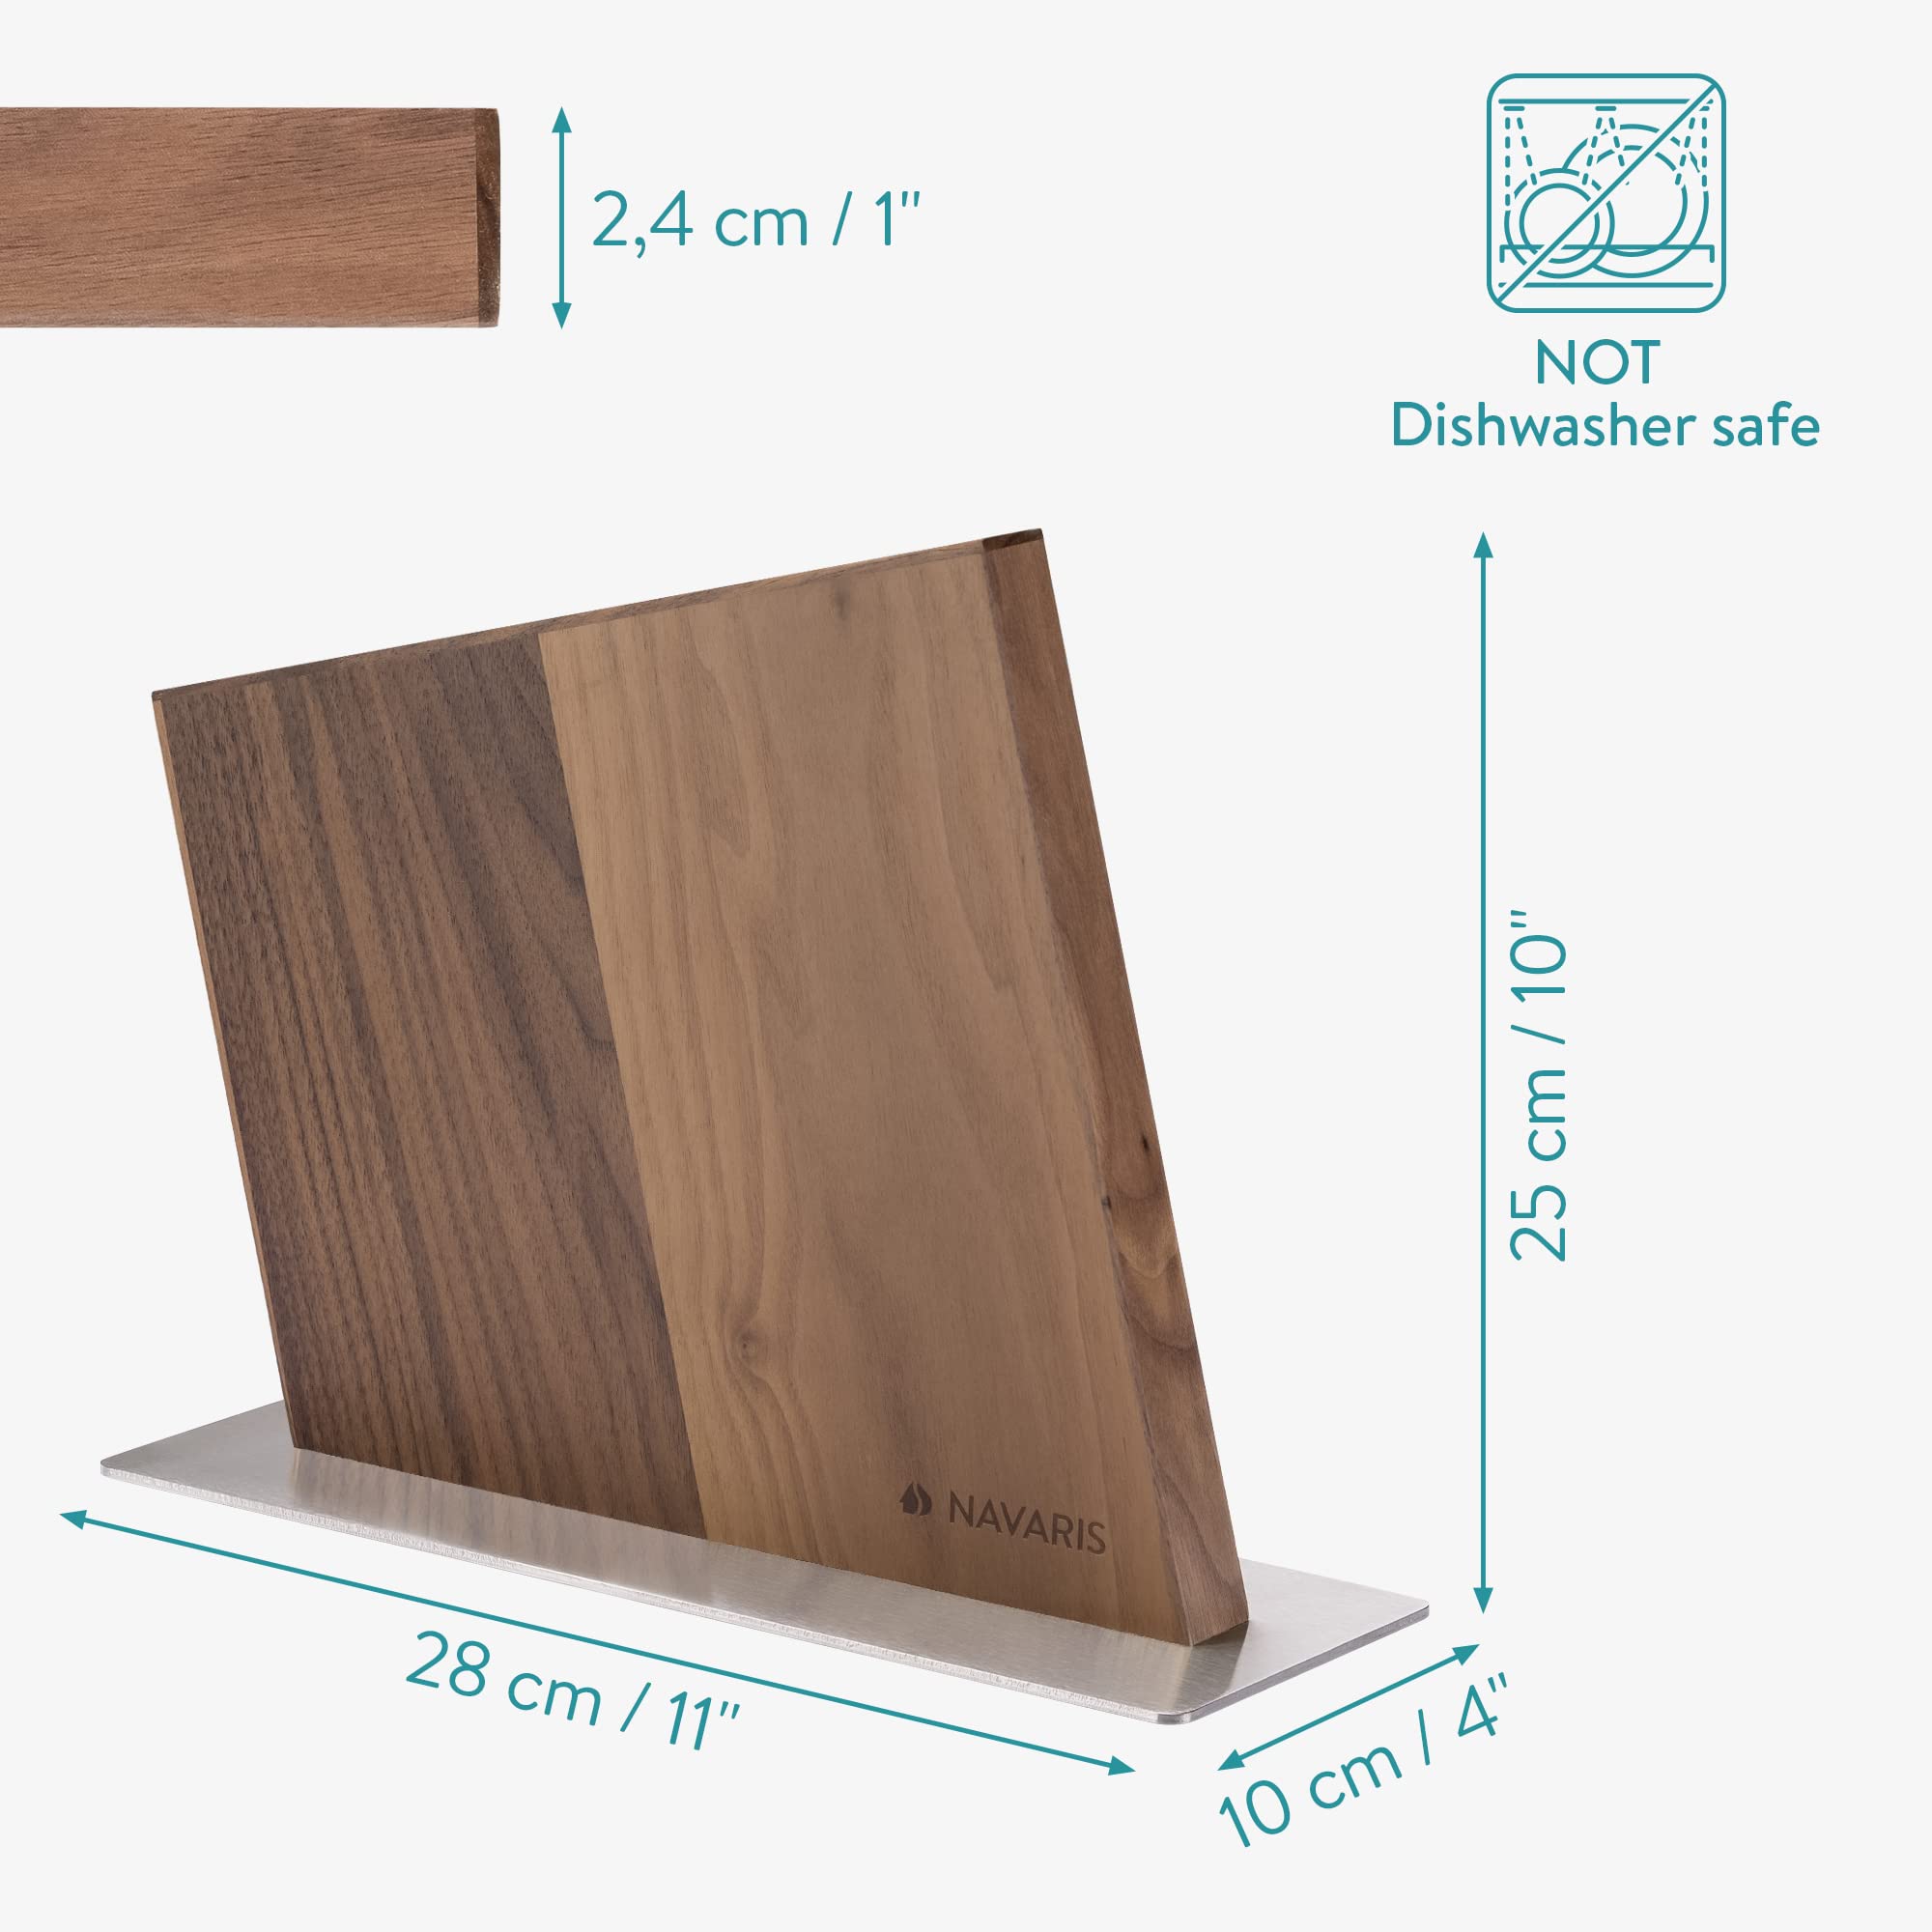 Navaris Wood Magnetic Knife Block - Double Sided Wooden Magnet Holder Board - Storage Stand for Kitchen Knives, Scissors, Metal Utensils - Walnut Wood